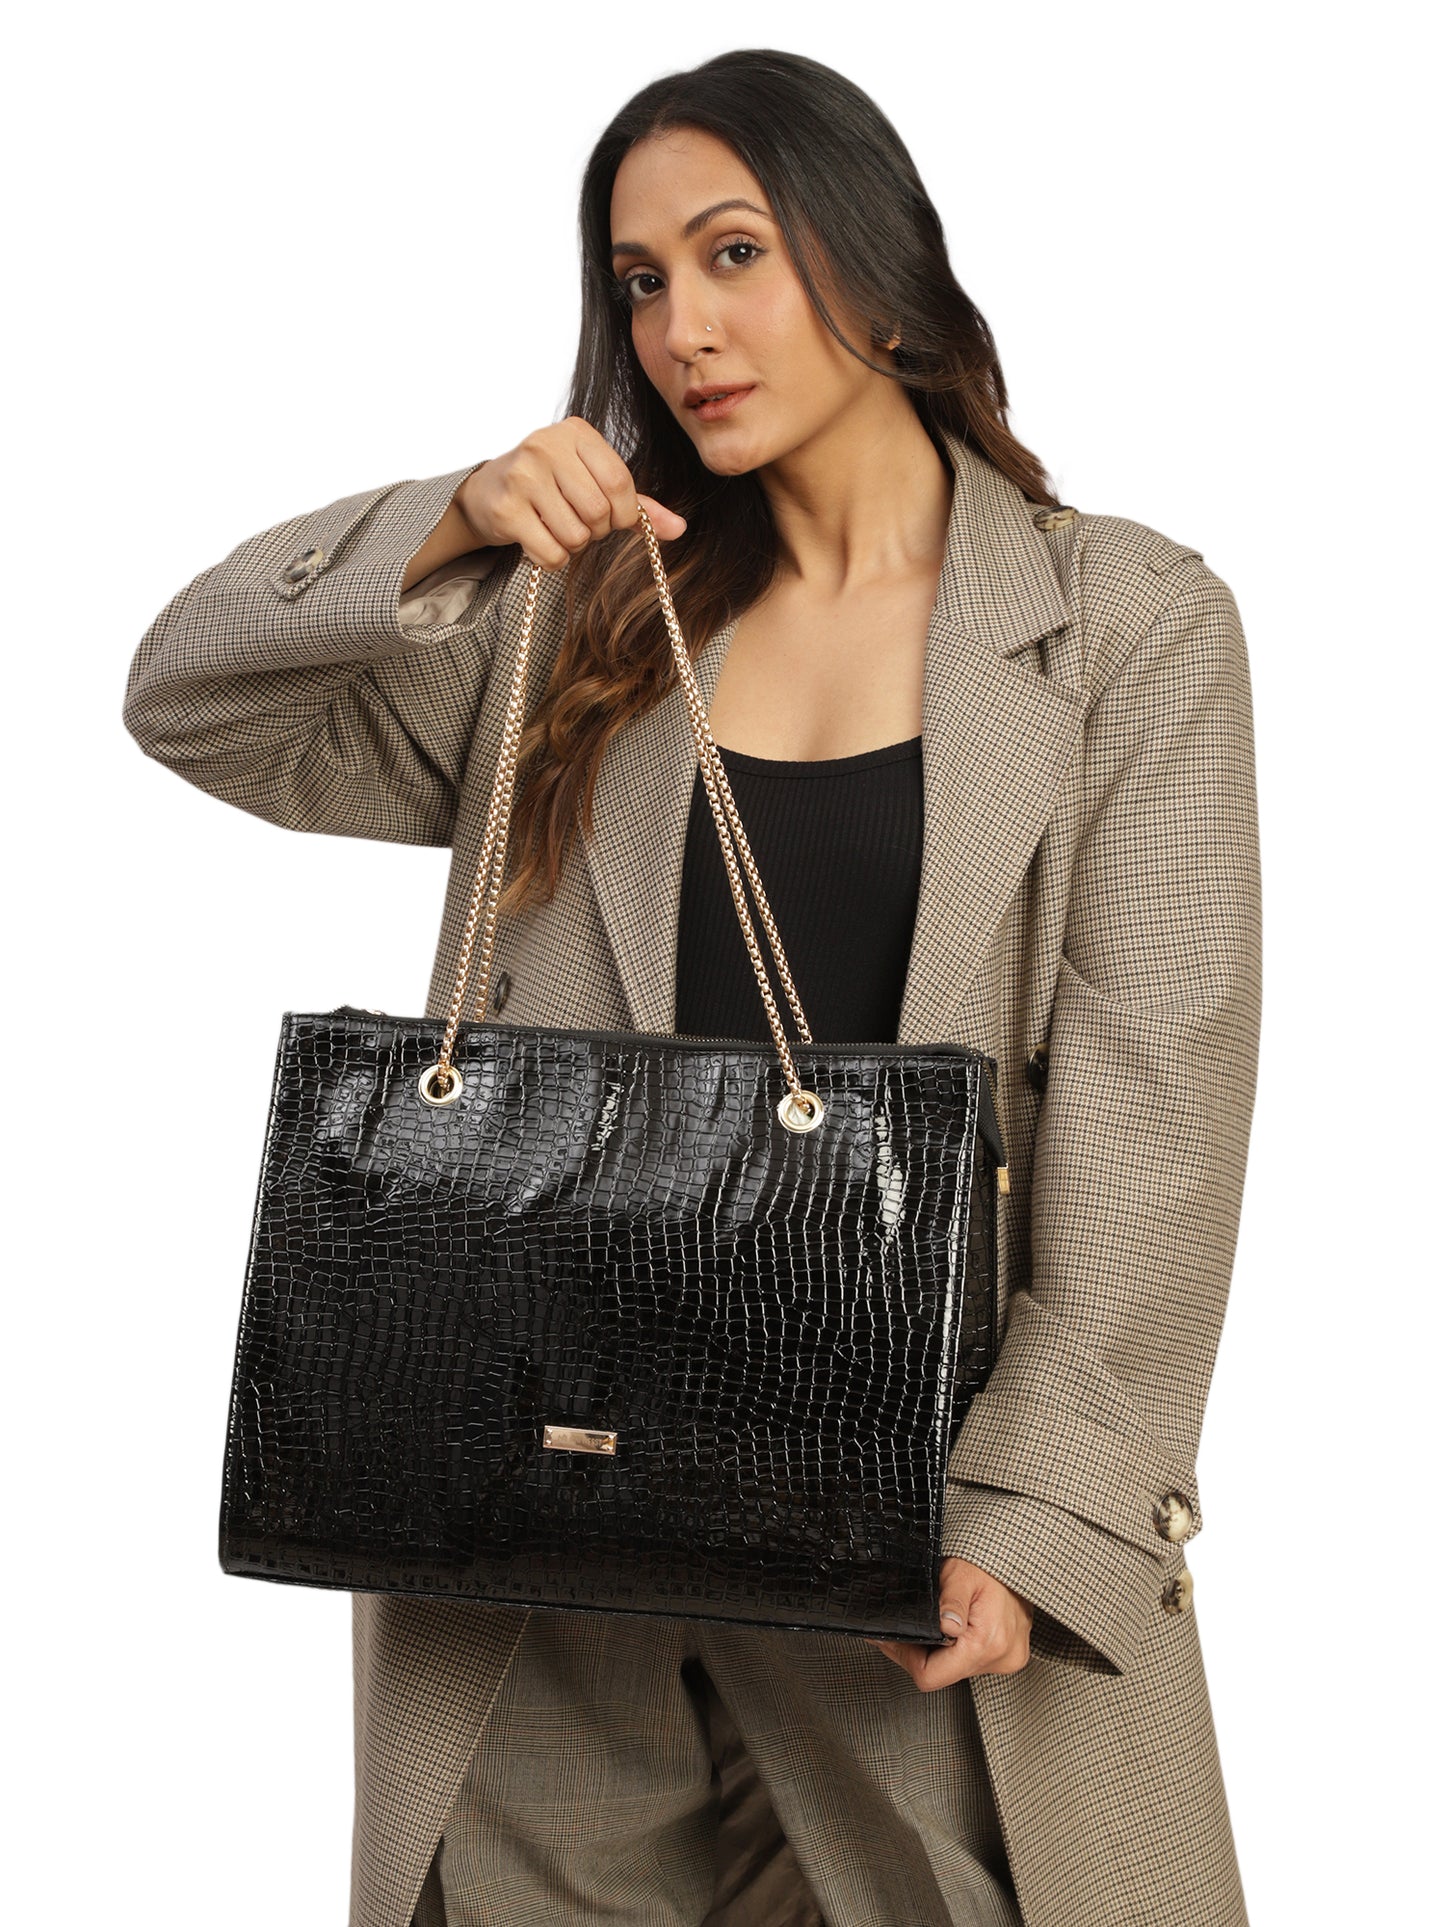 MINI WESST Women's Black Handbag  and Pouch(MWTB005BL)